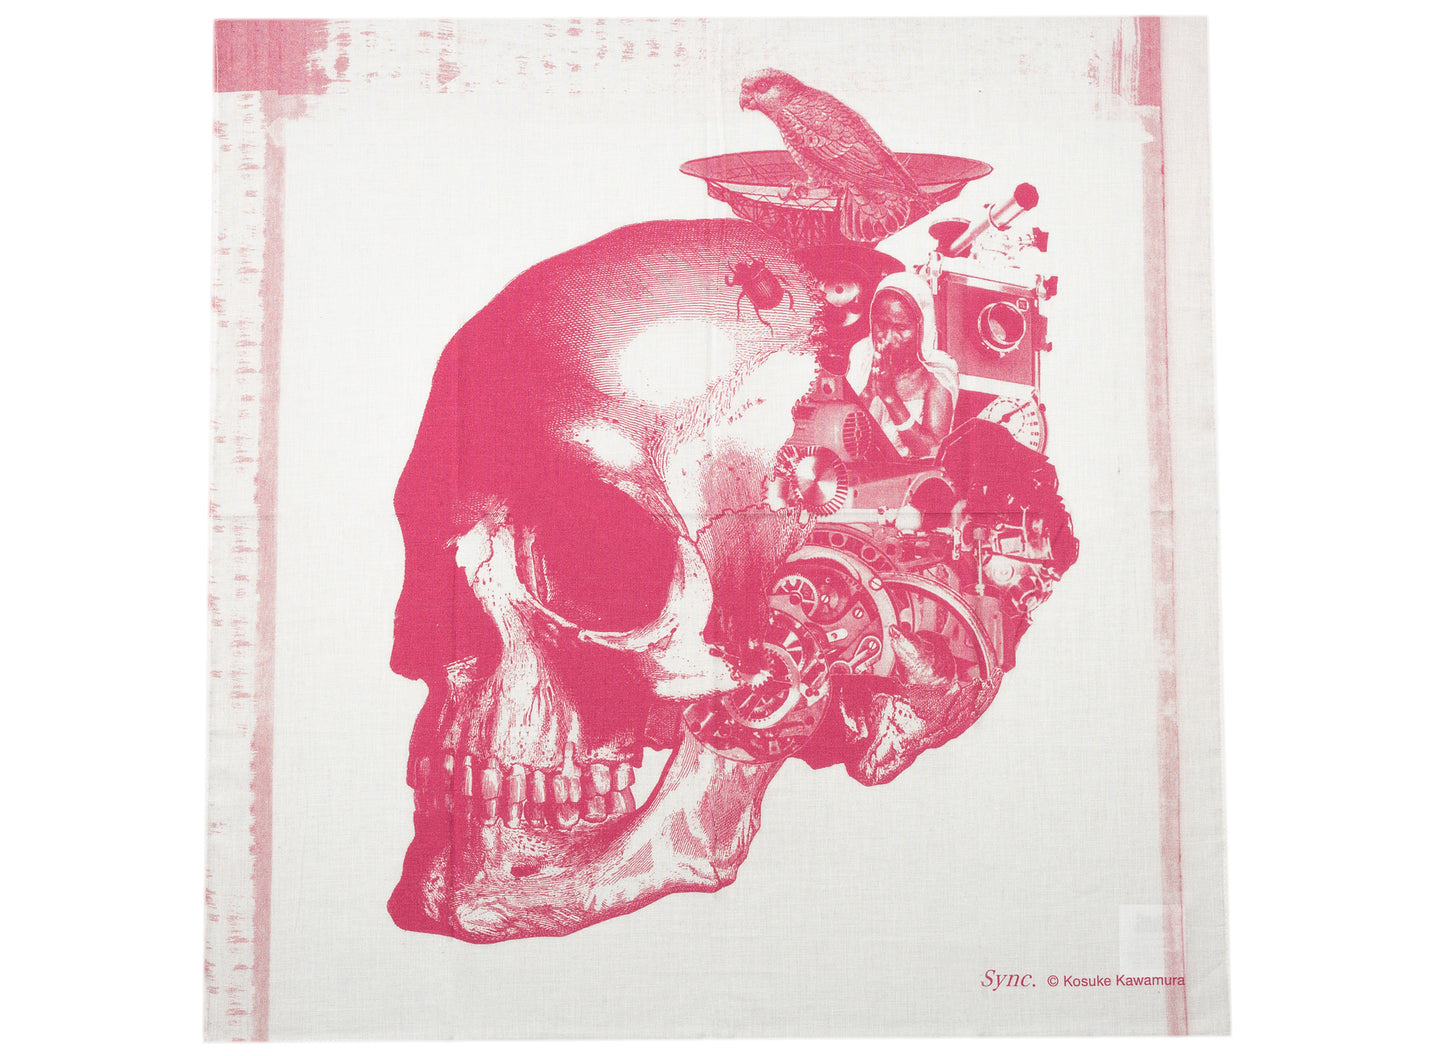 Medicom Toy Be@rbrick Kosuke Kawamura Skull Bandana 'Pink'